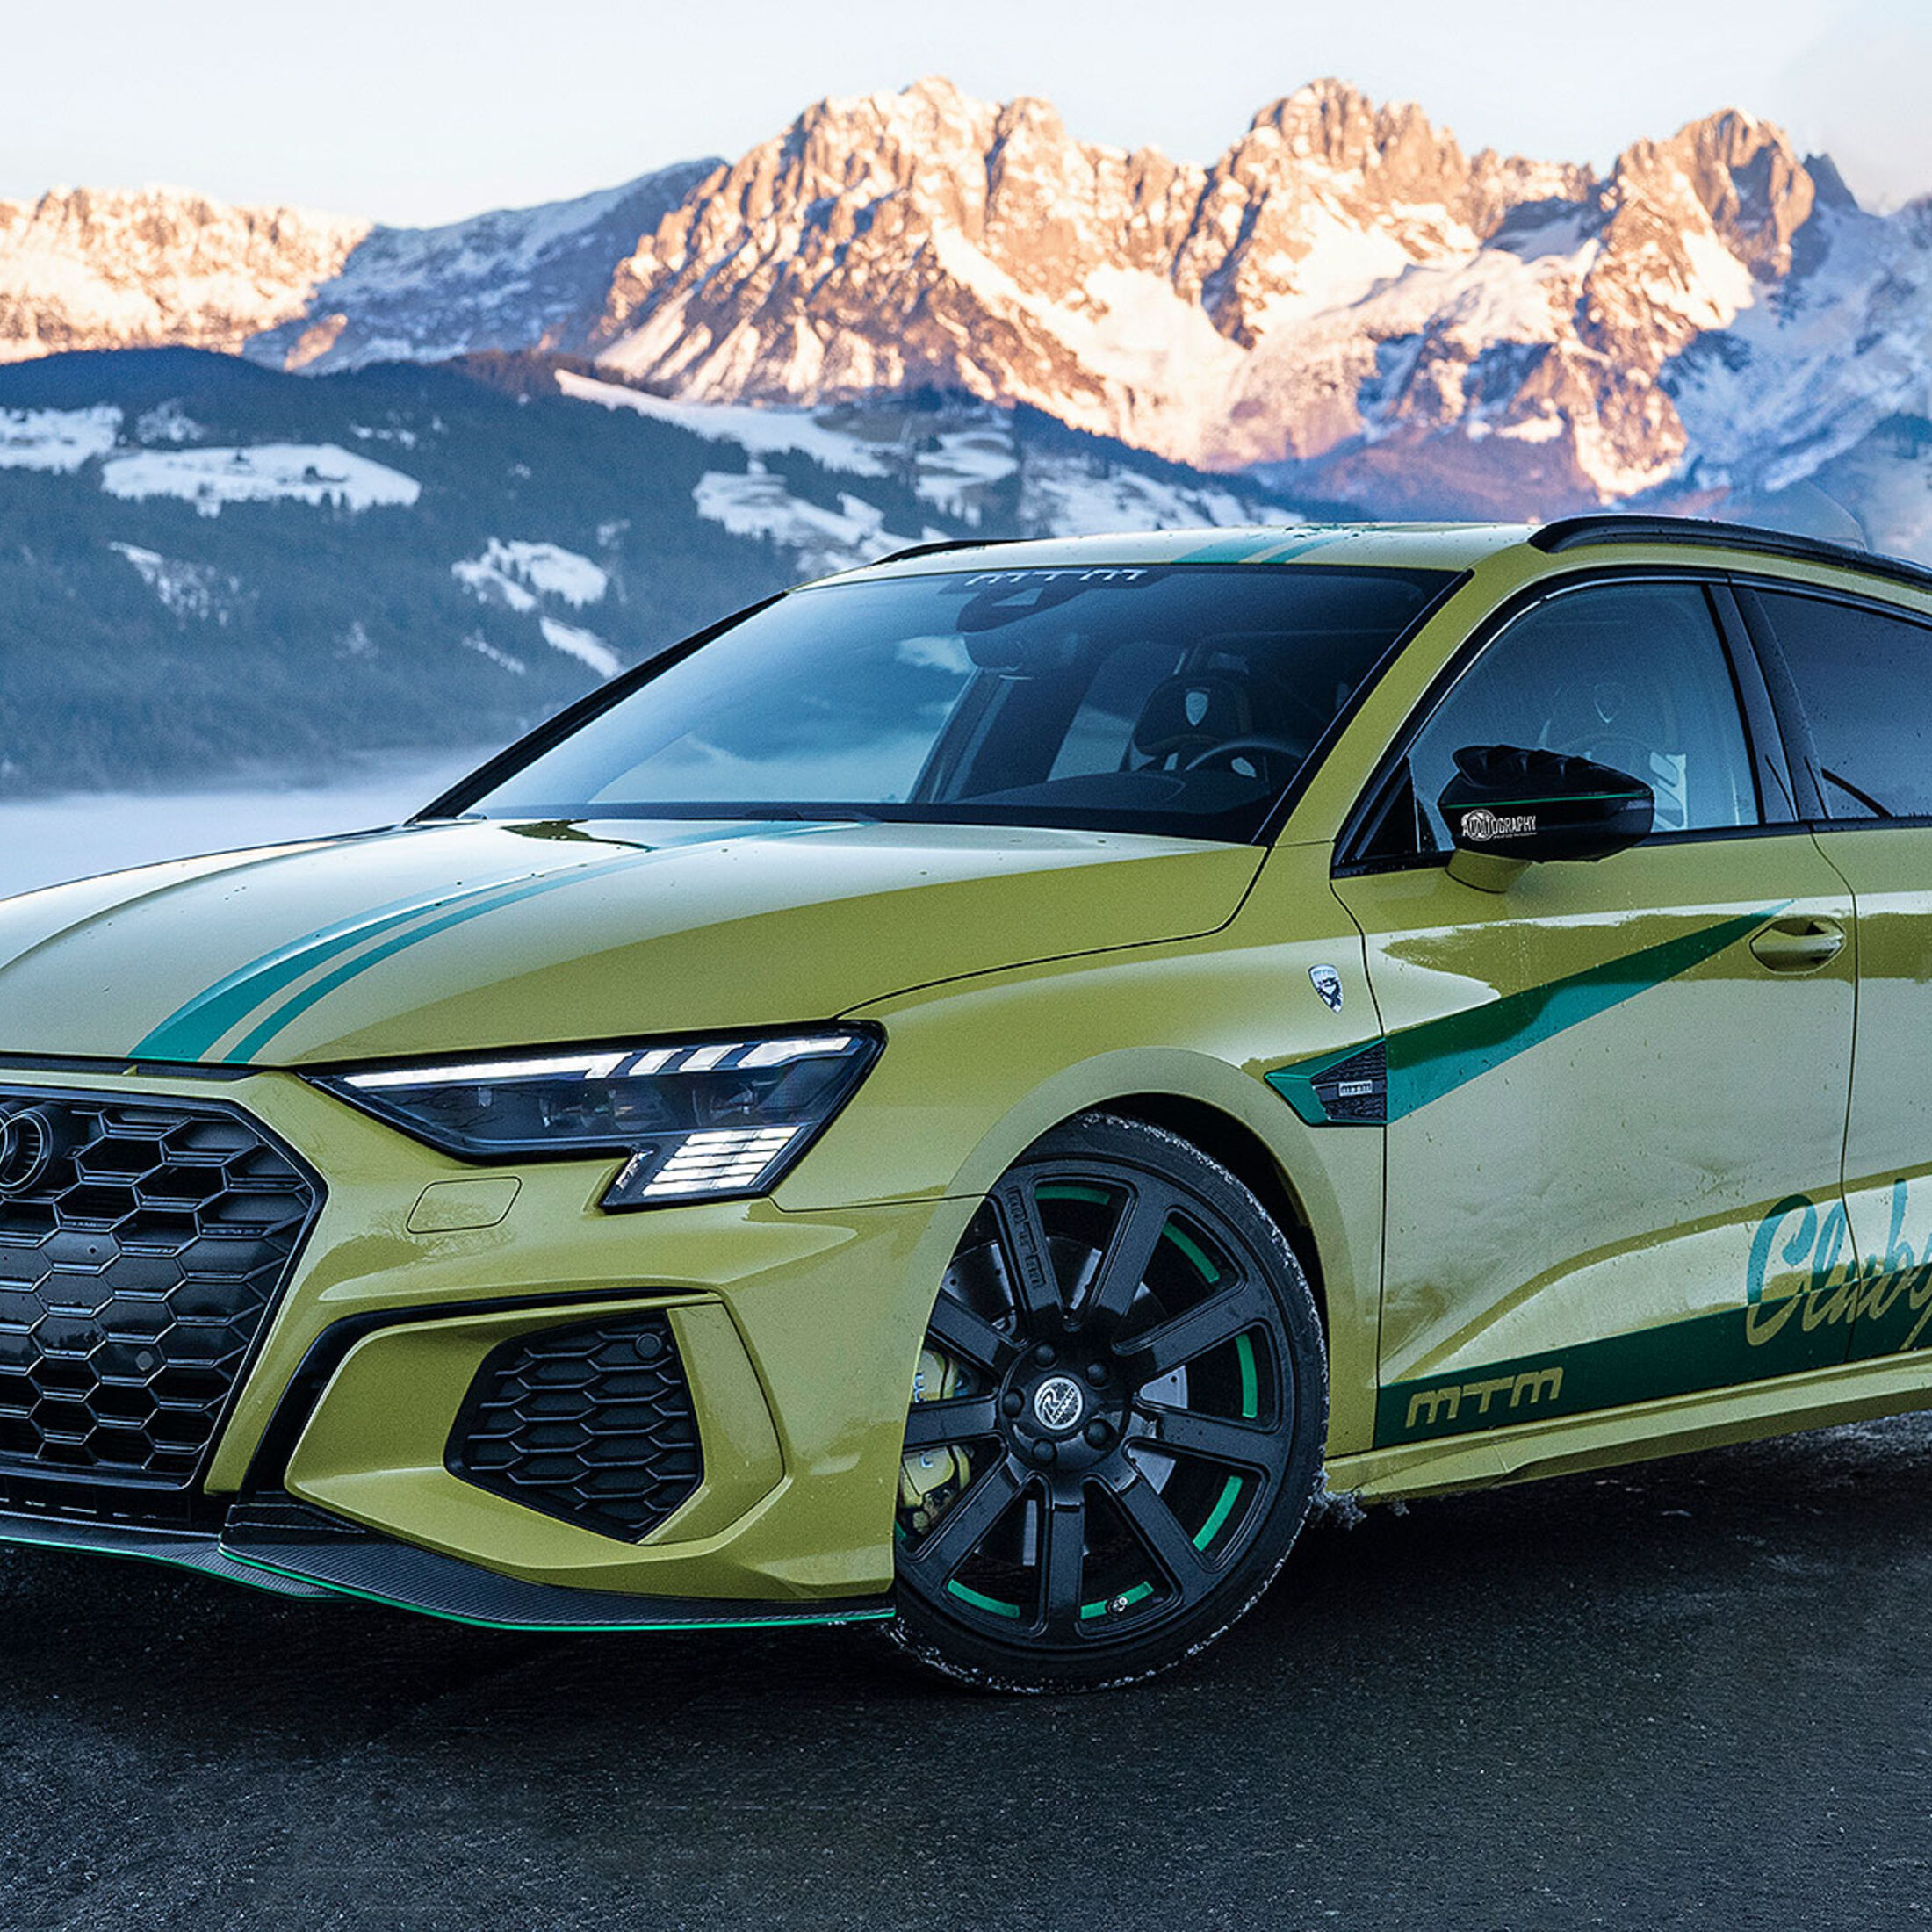 https://imgr1.auto-motor-und-sport.de/MTM-Audi-S3-Clubsport-jsonLd1x1-7b0b6bac-1869603.jpg